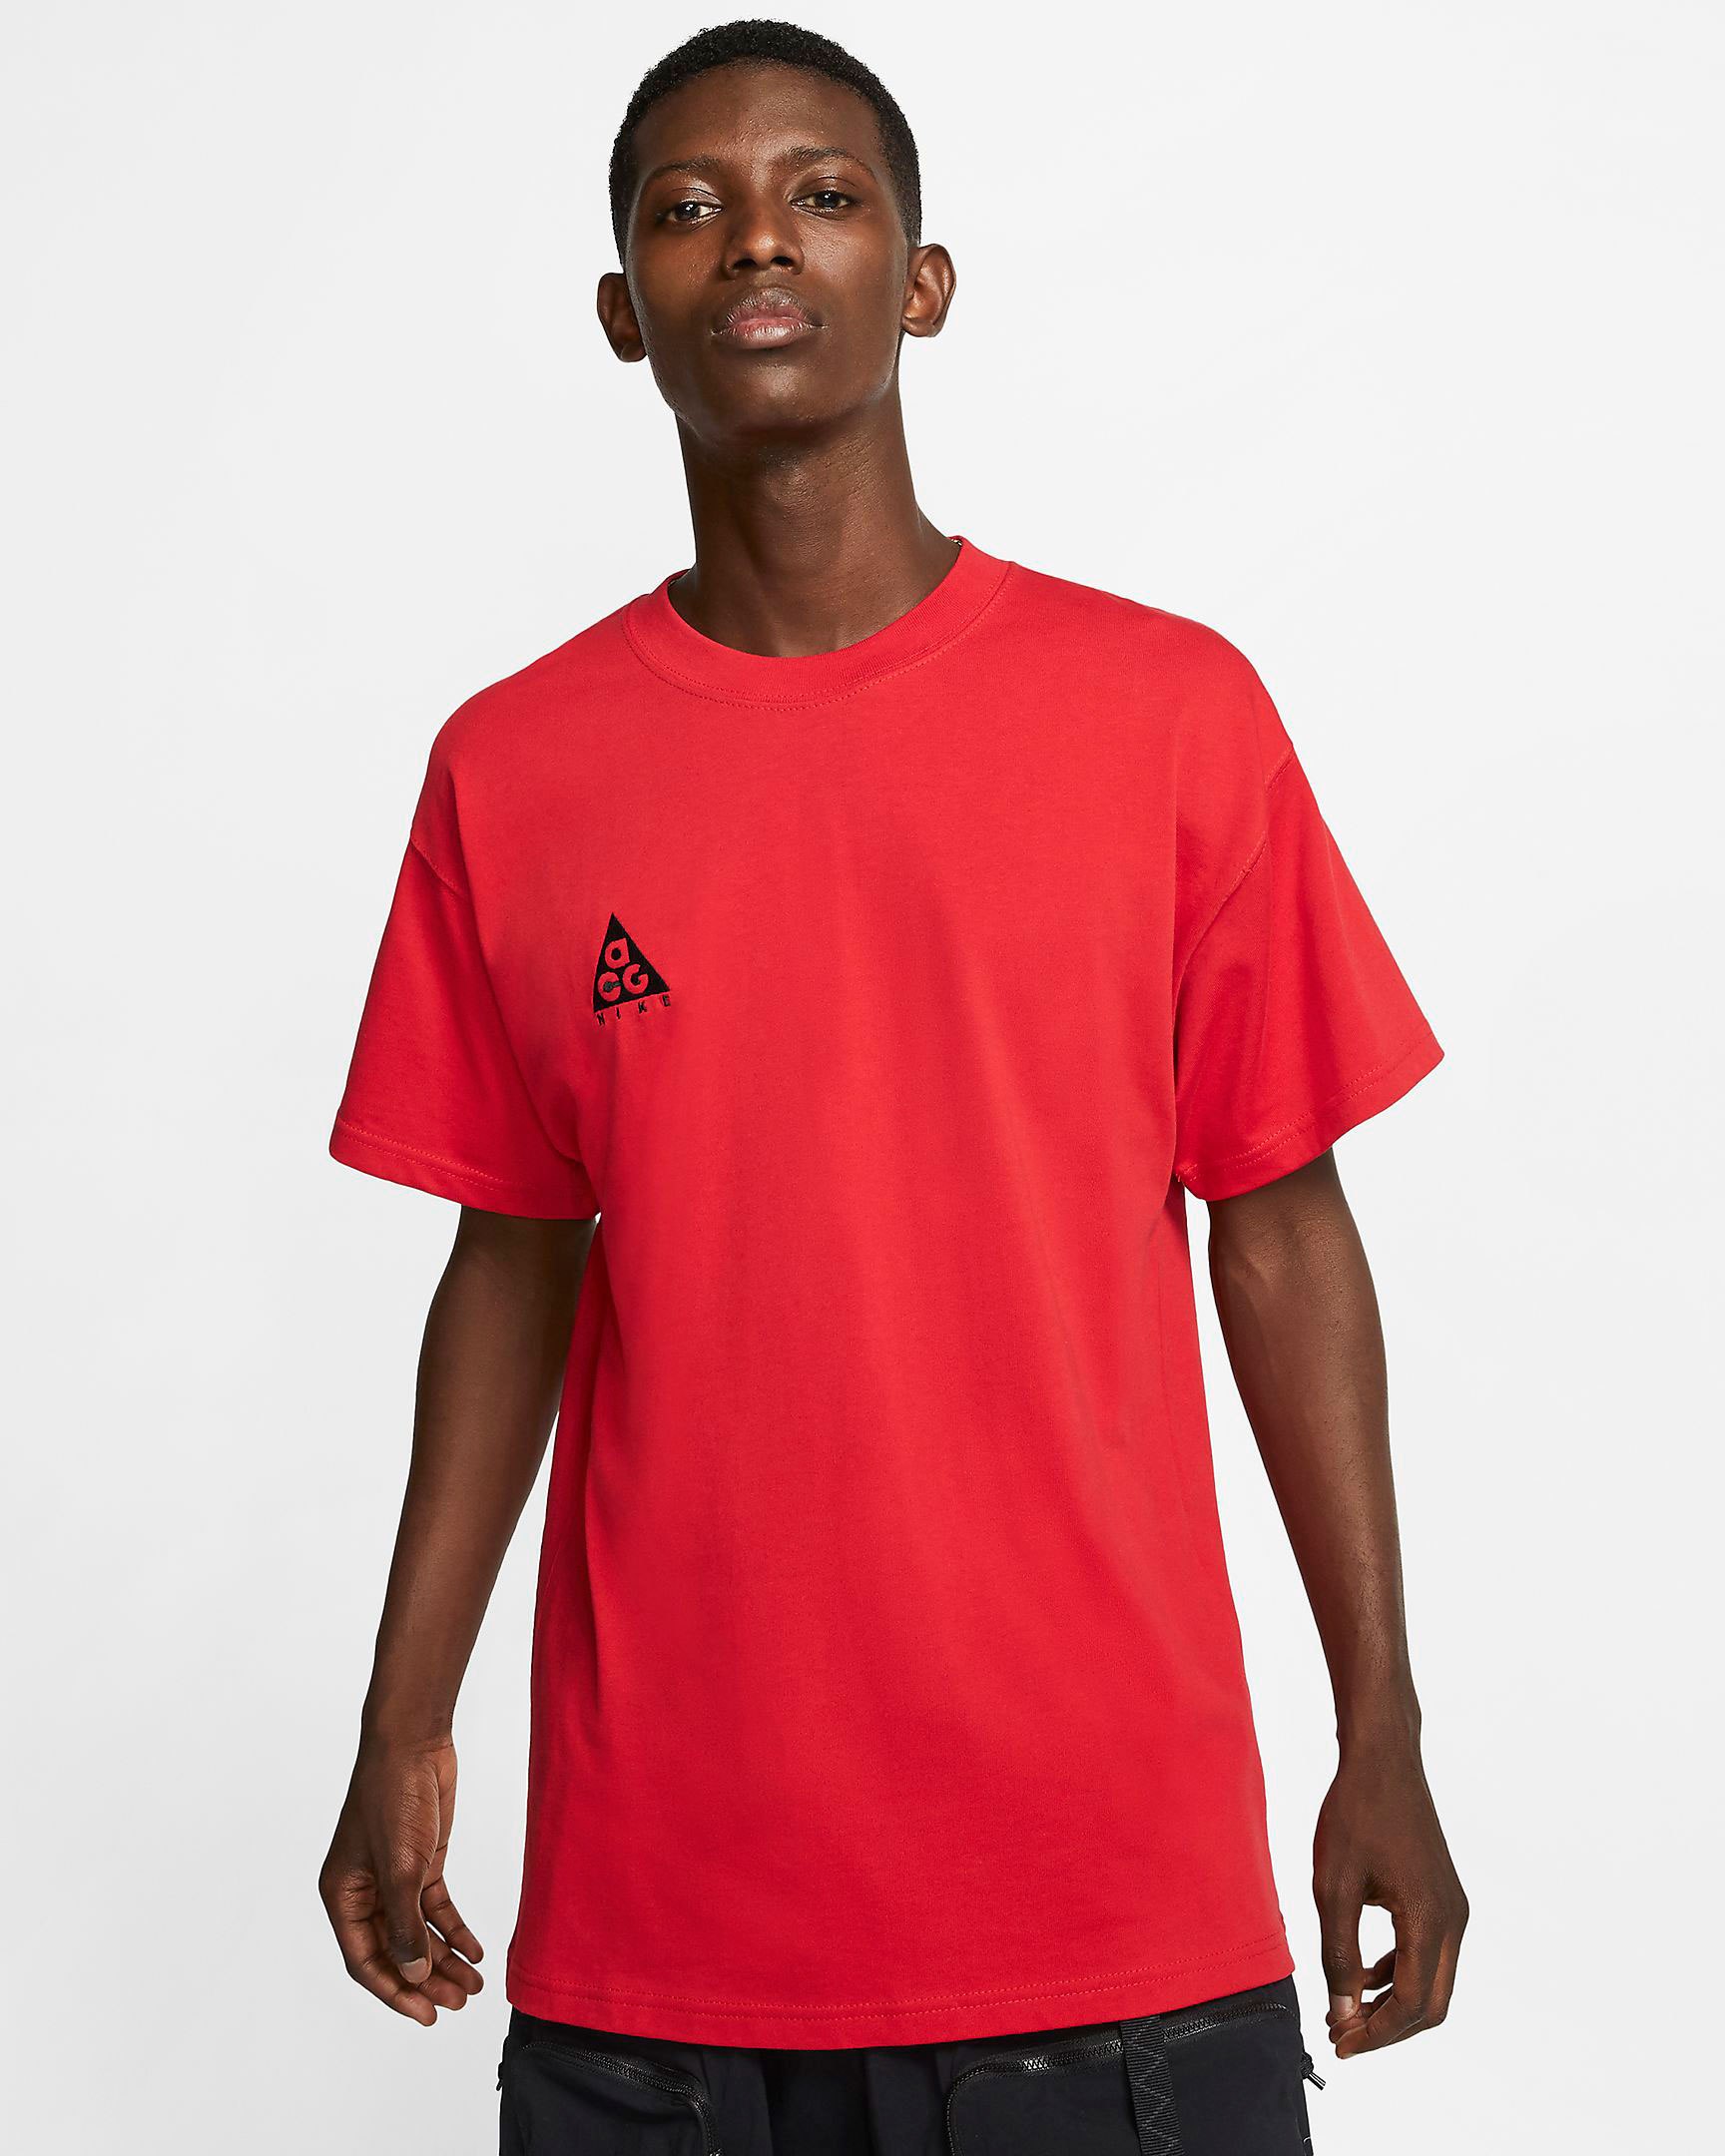 nike-acg-shirt-red